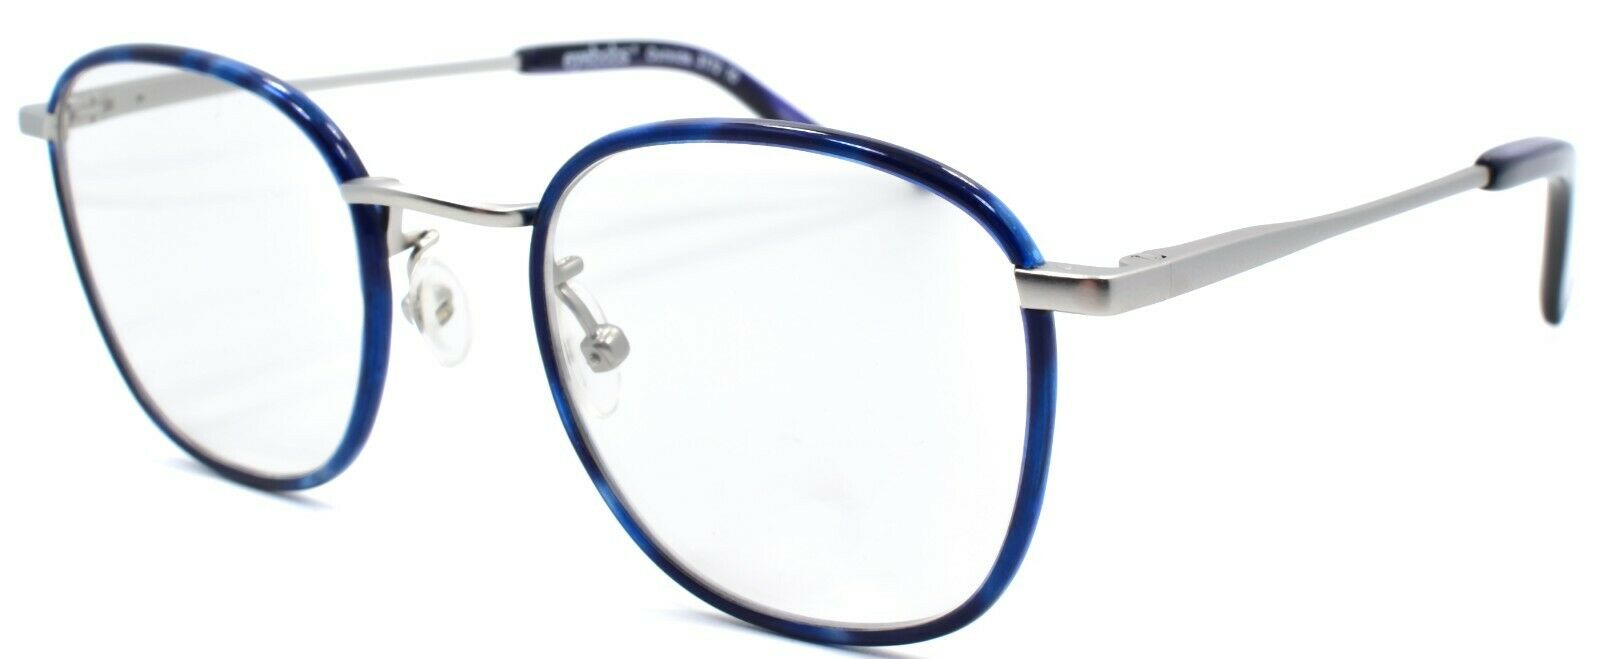 1-Eyebobs Outside 3172 10 Unisex Reading Glasses Blue / Silver +1.00-842754168724-IKSpecs